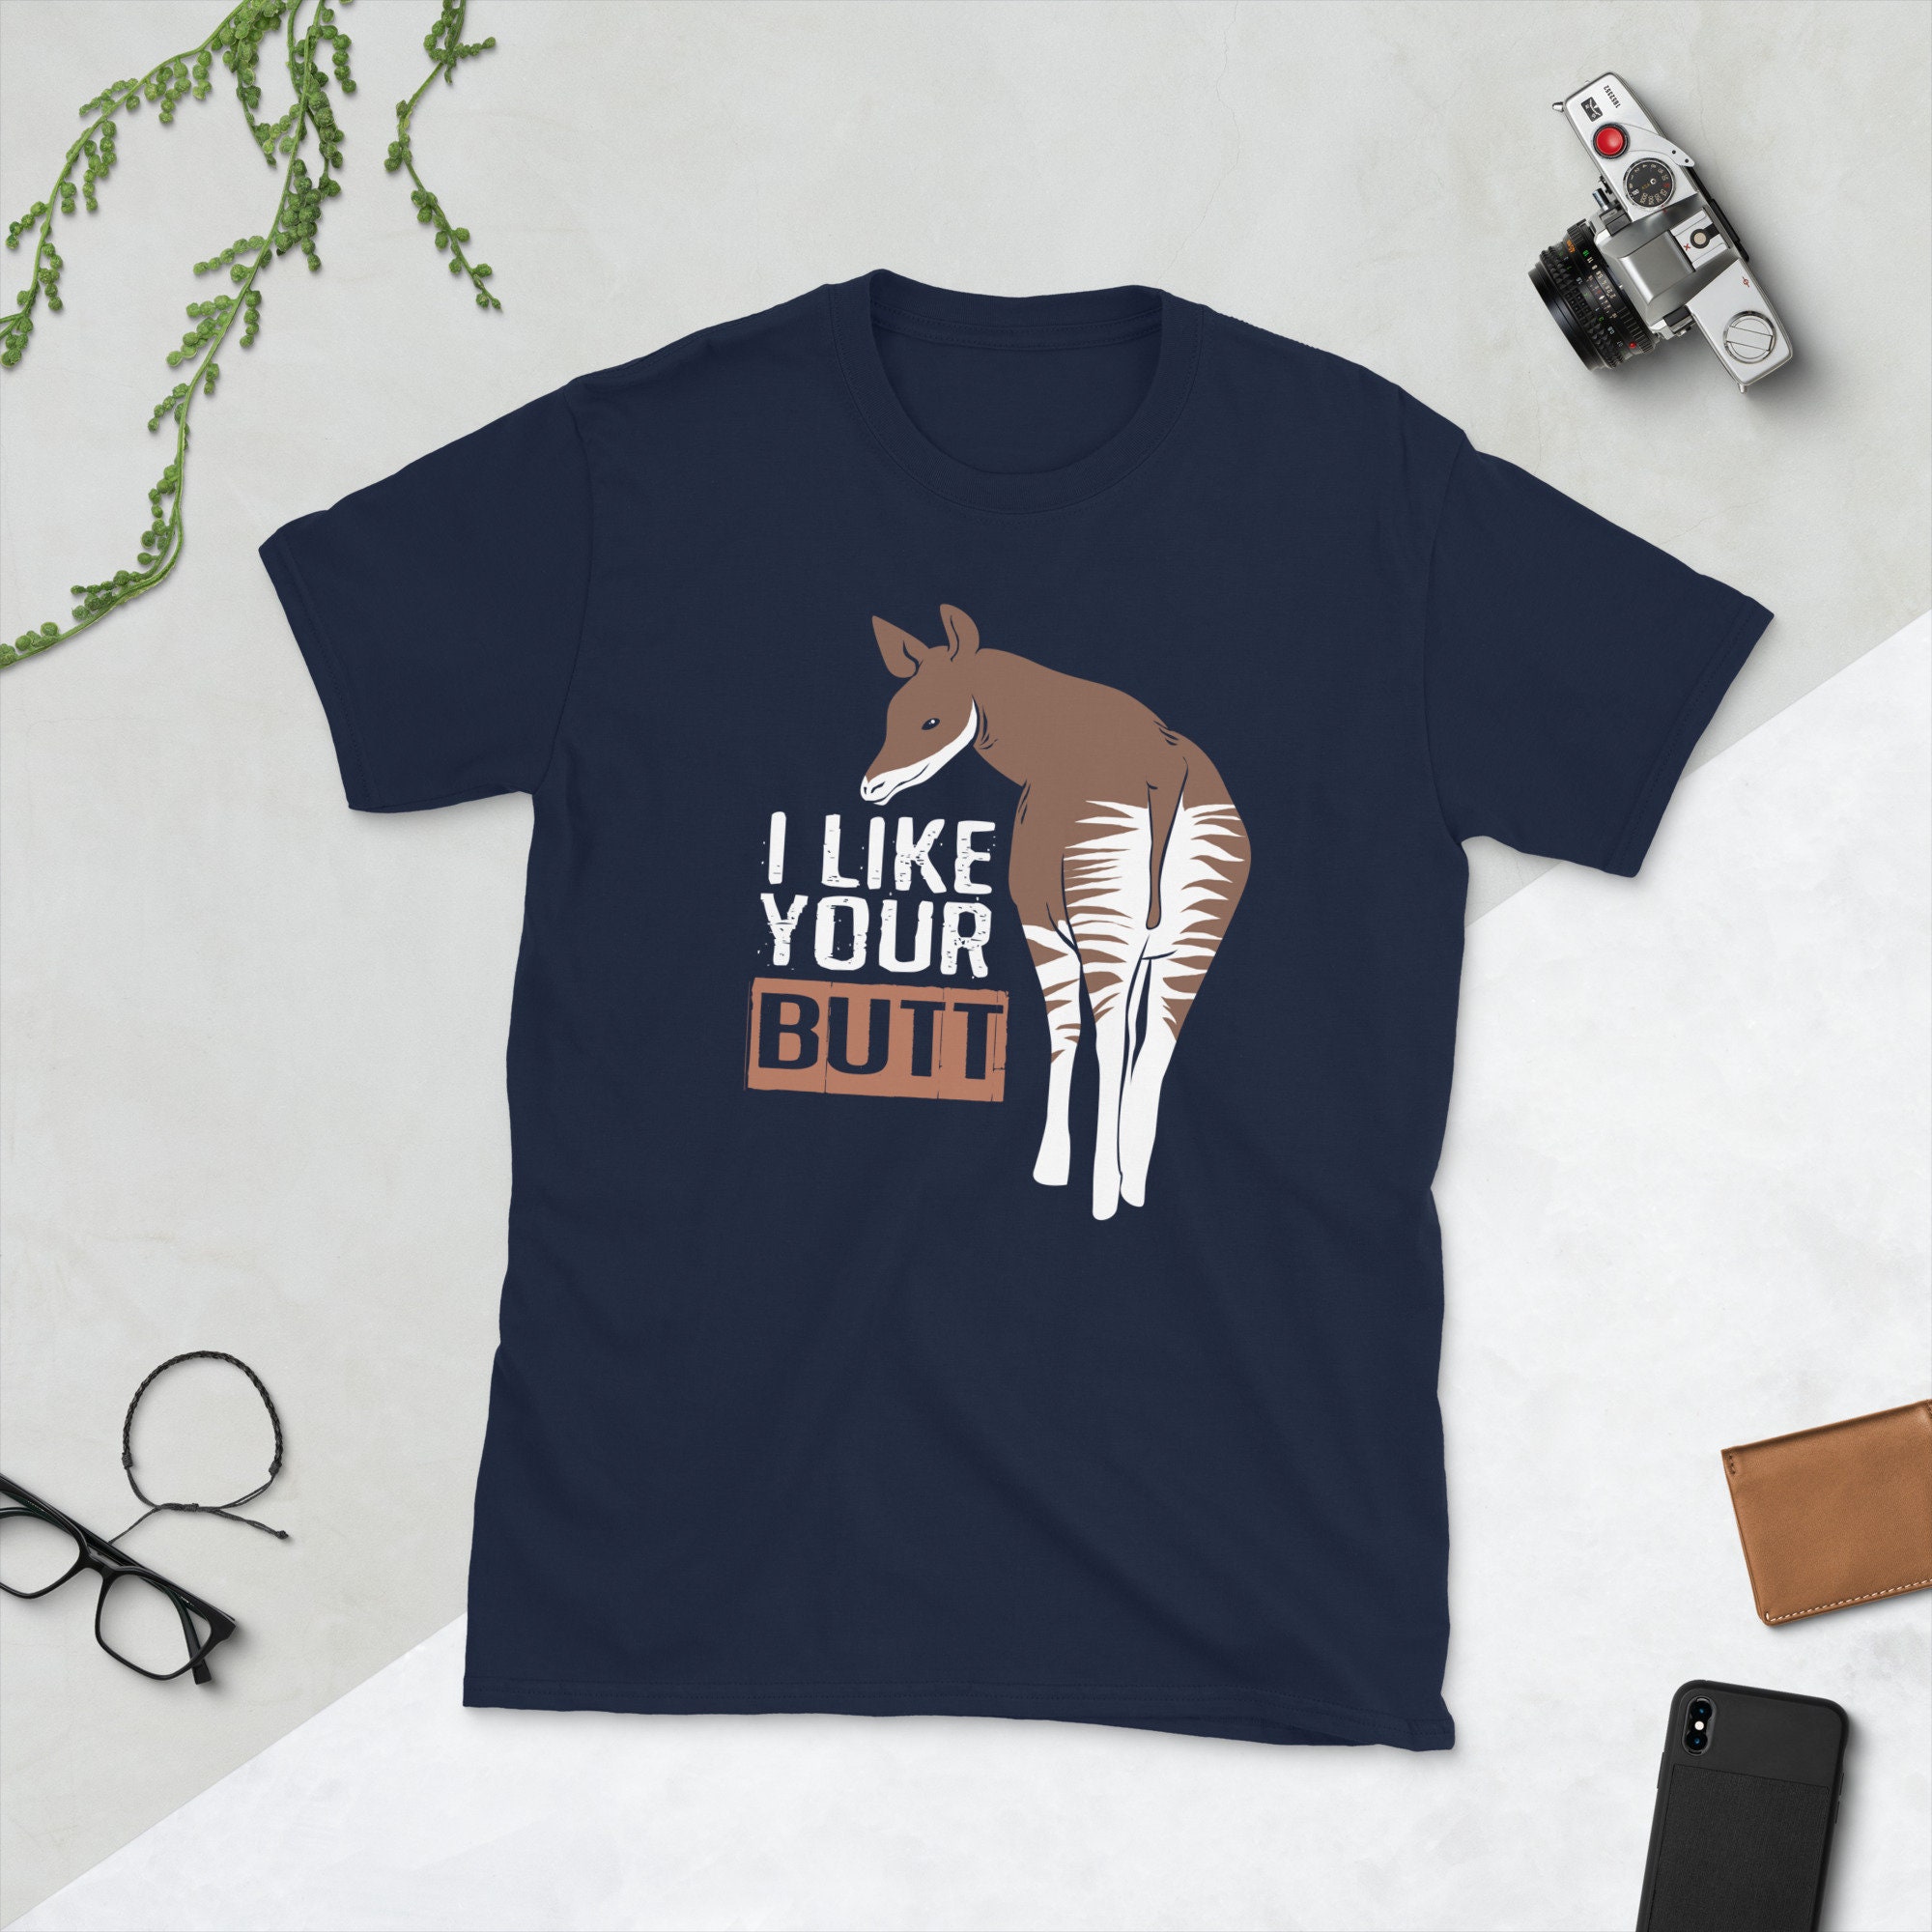 I Like Your Butt, Okapi Shirt, Funny Humor Shirt, Funny Animal Shirt, Adult  Humor Shirt, I Love Your Butt, Okapi Humor 